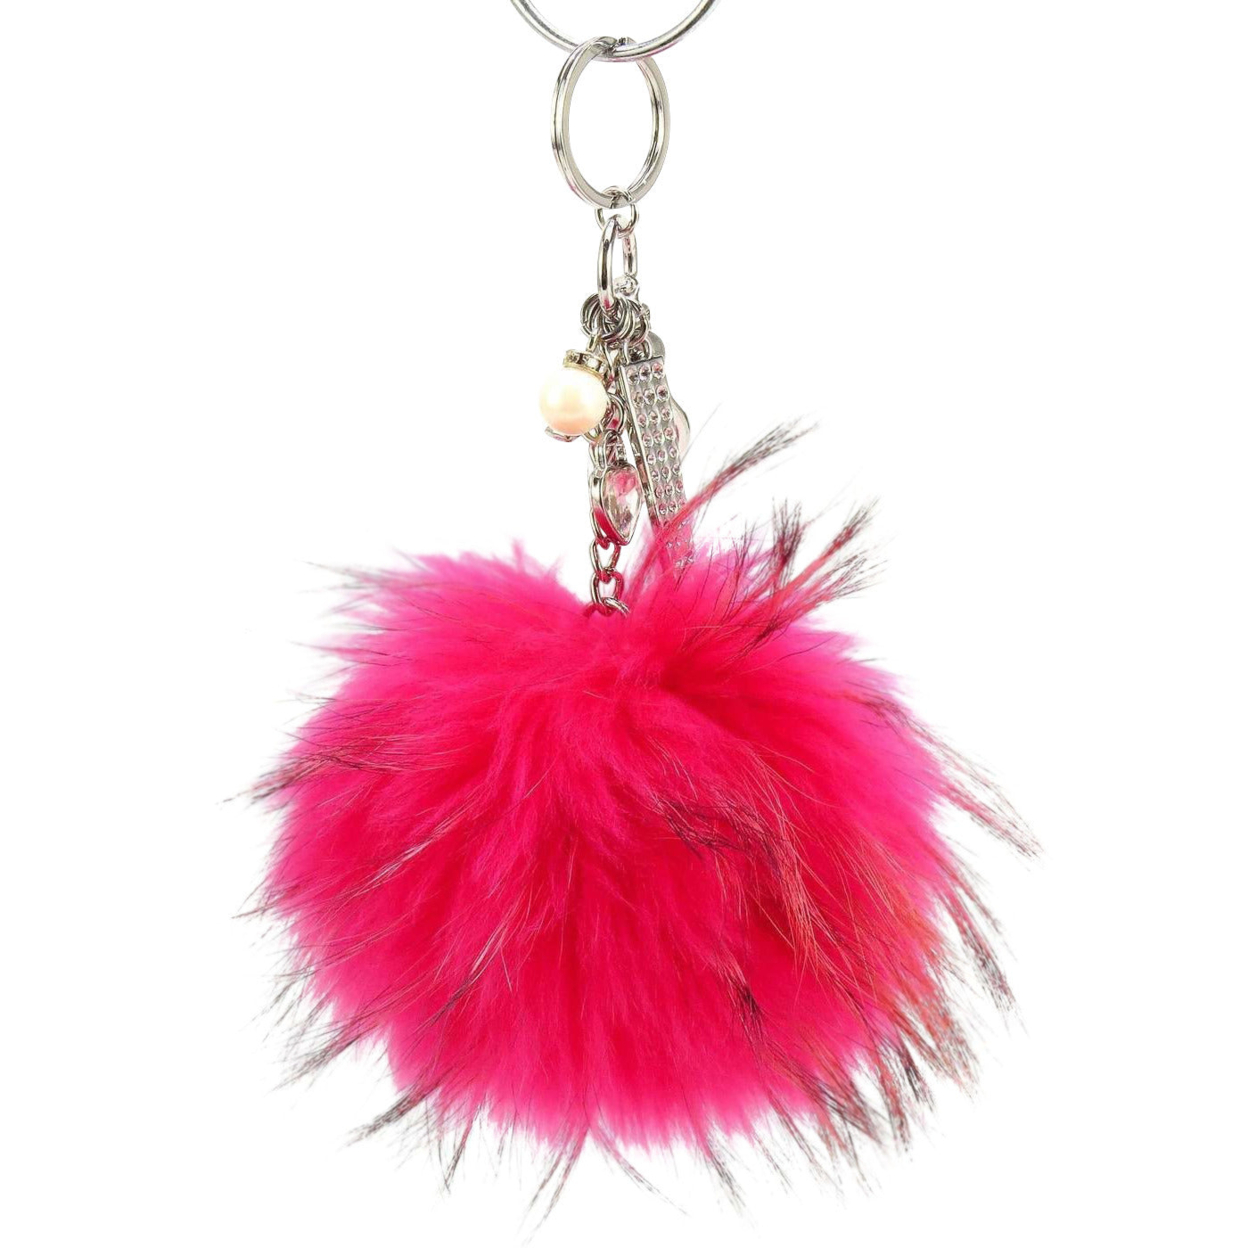 Real Fur Puff Ball Pom-Pom 6 Dangle Purse Charm - Fandango Hot Pink With Silver Hardware